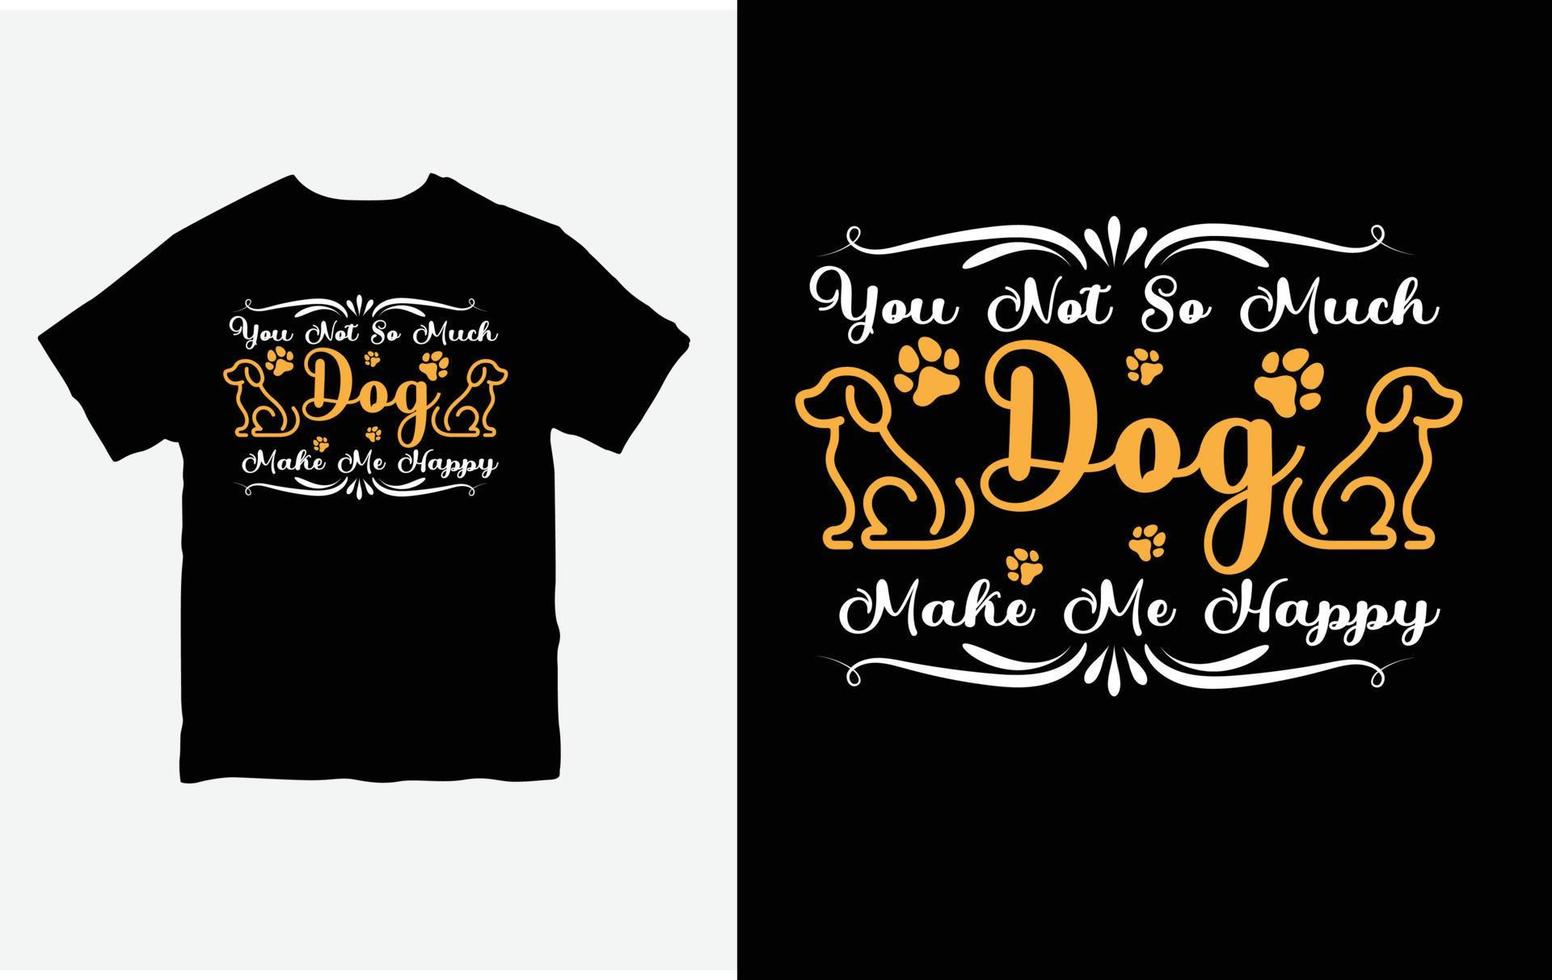 Puppy Day T Shirt, Dog T-shirt Design, Free Vector. vector